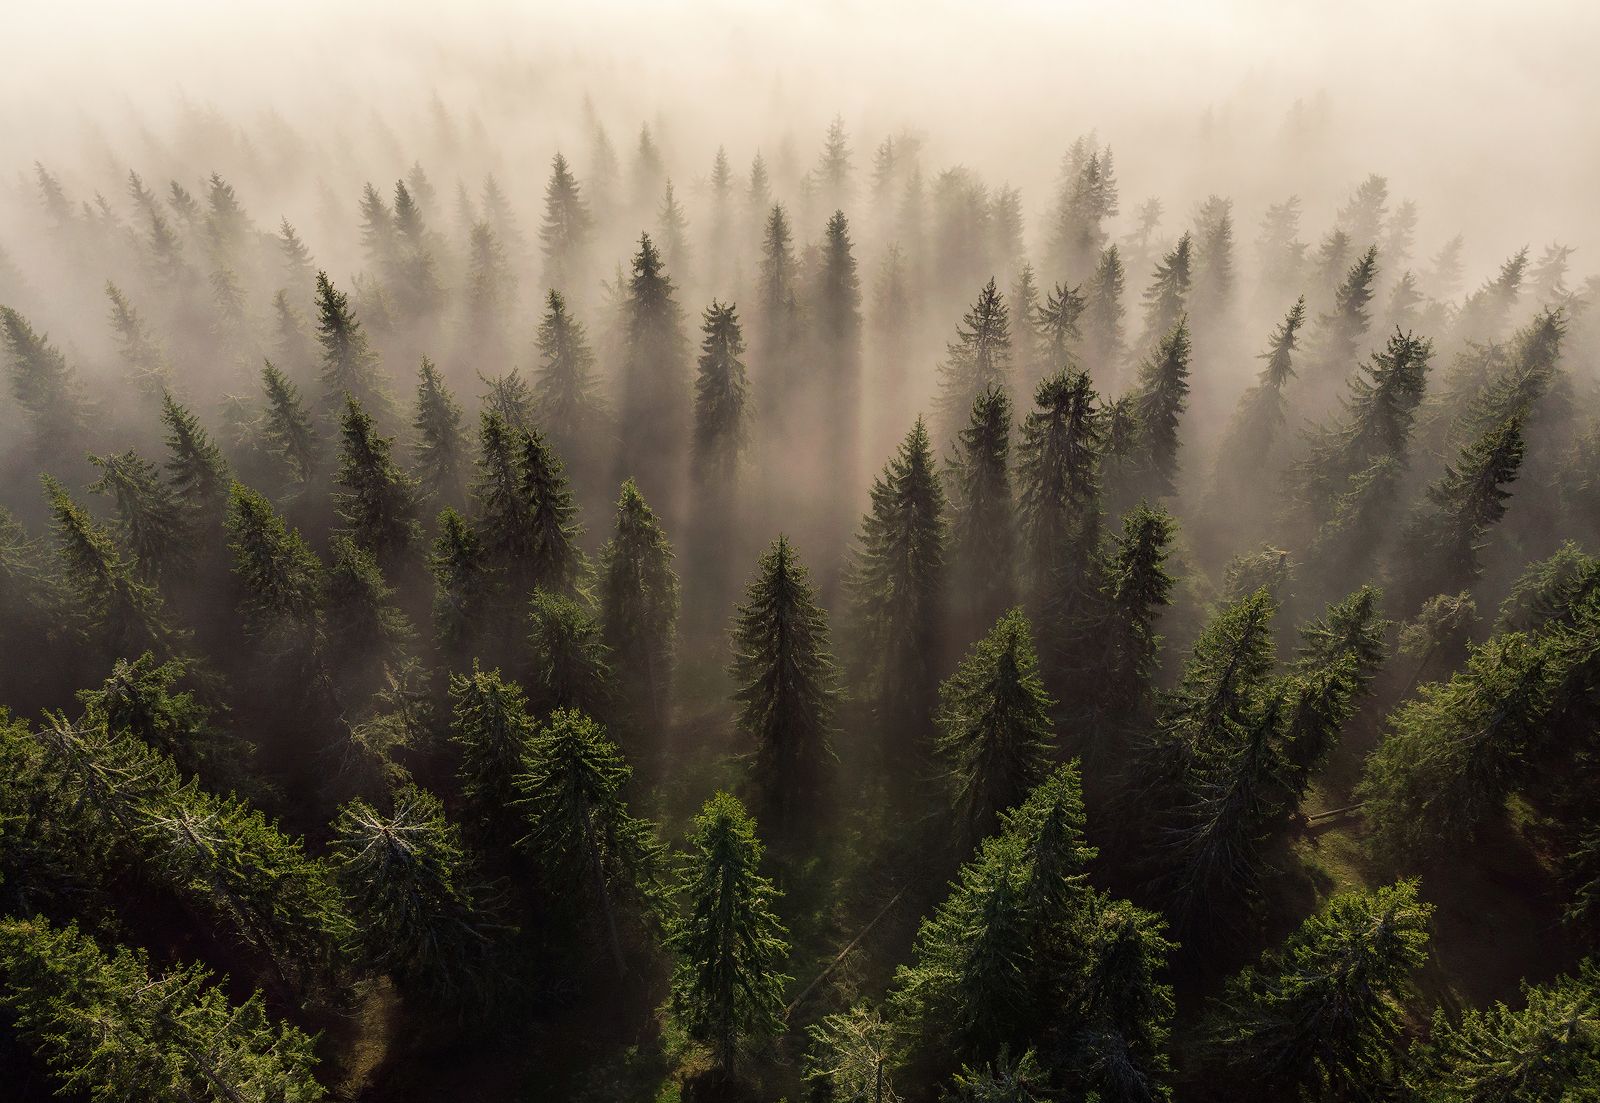 #trees #mountains #fog #misty #romania #morning #sunrise #haze #forest #landscape #travel, Lazar Ioan Ovidiu